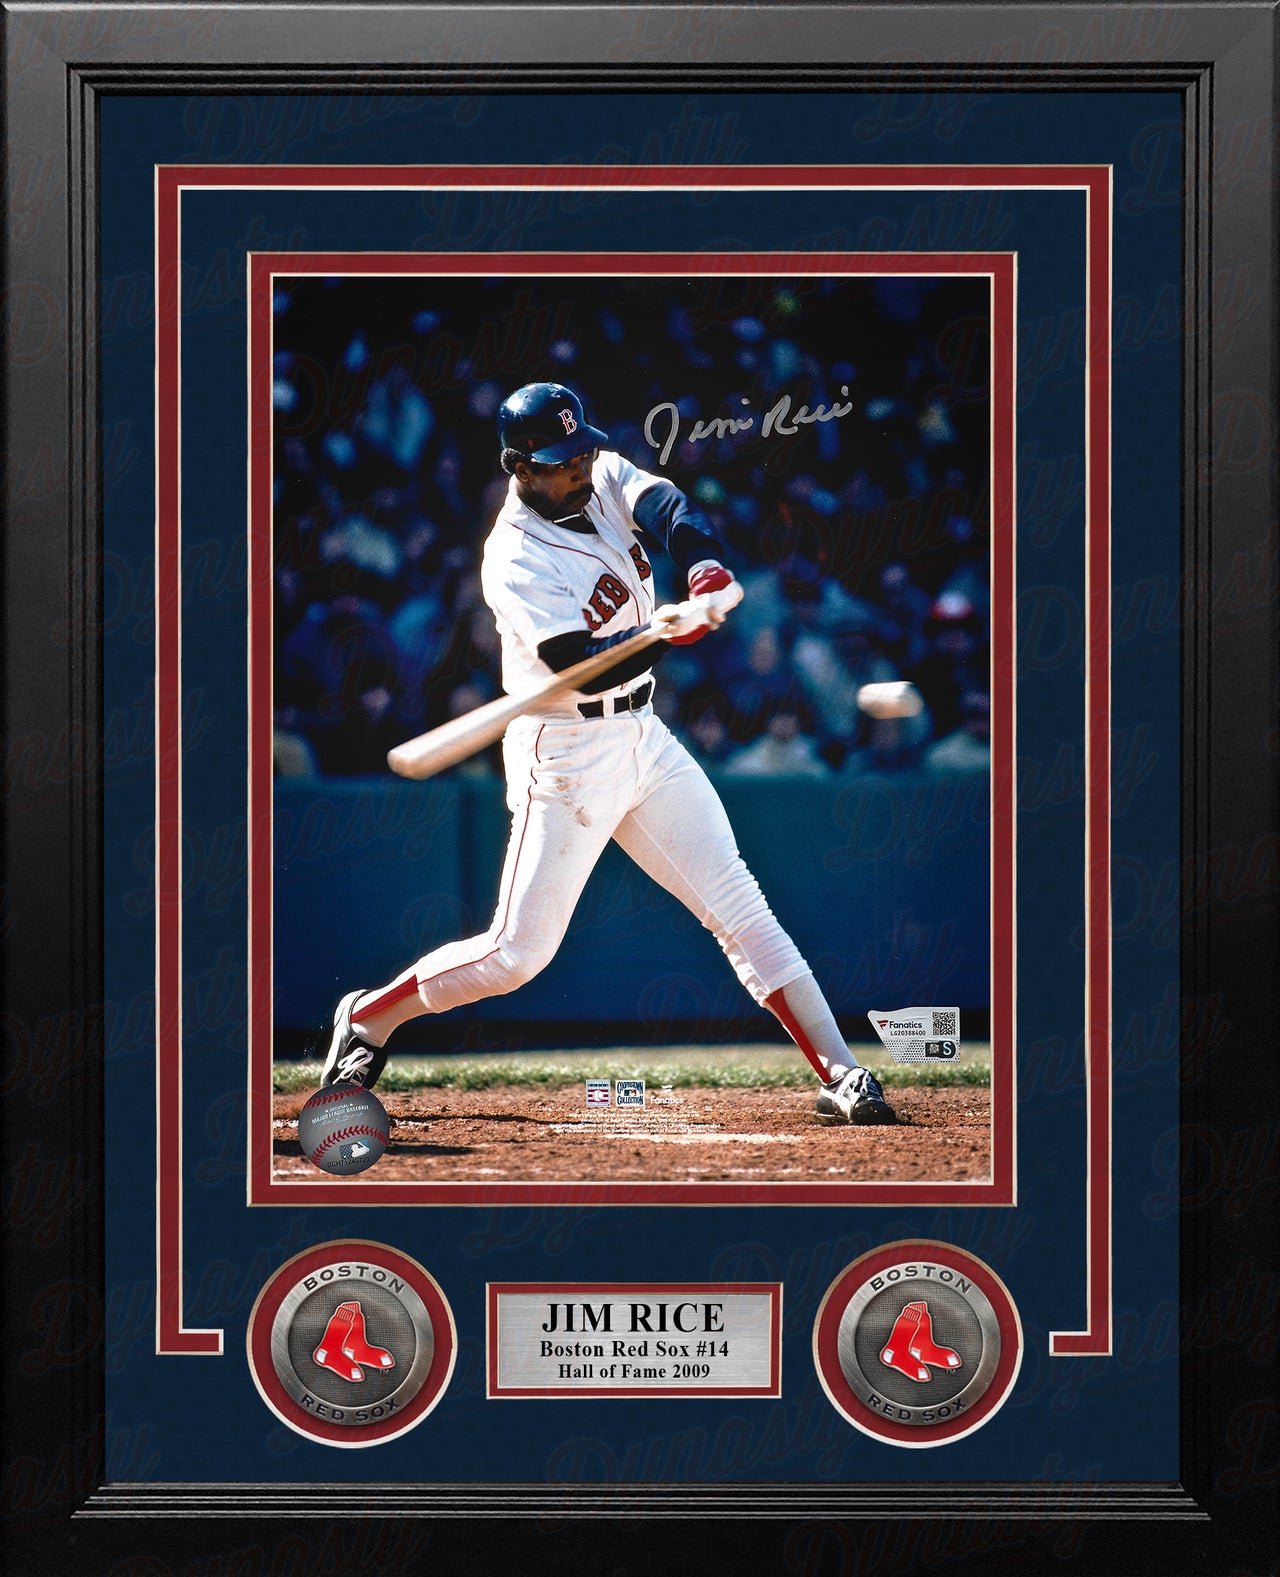 Jim Rice At-Bat Boston Red Sox Autographed 8" x 10" Framed Baseball Photo - Dynasty Sports & Framing 